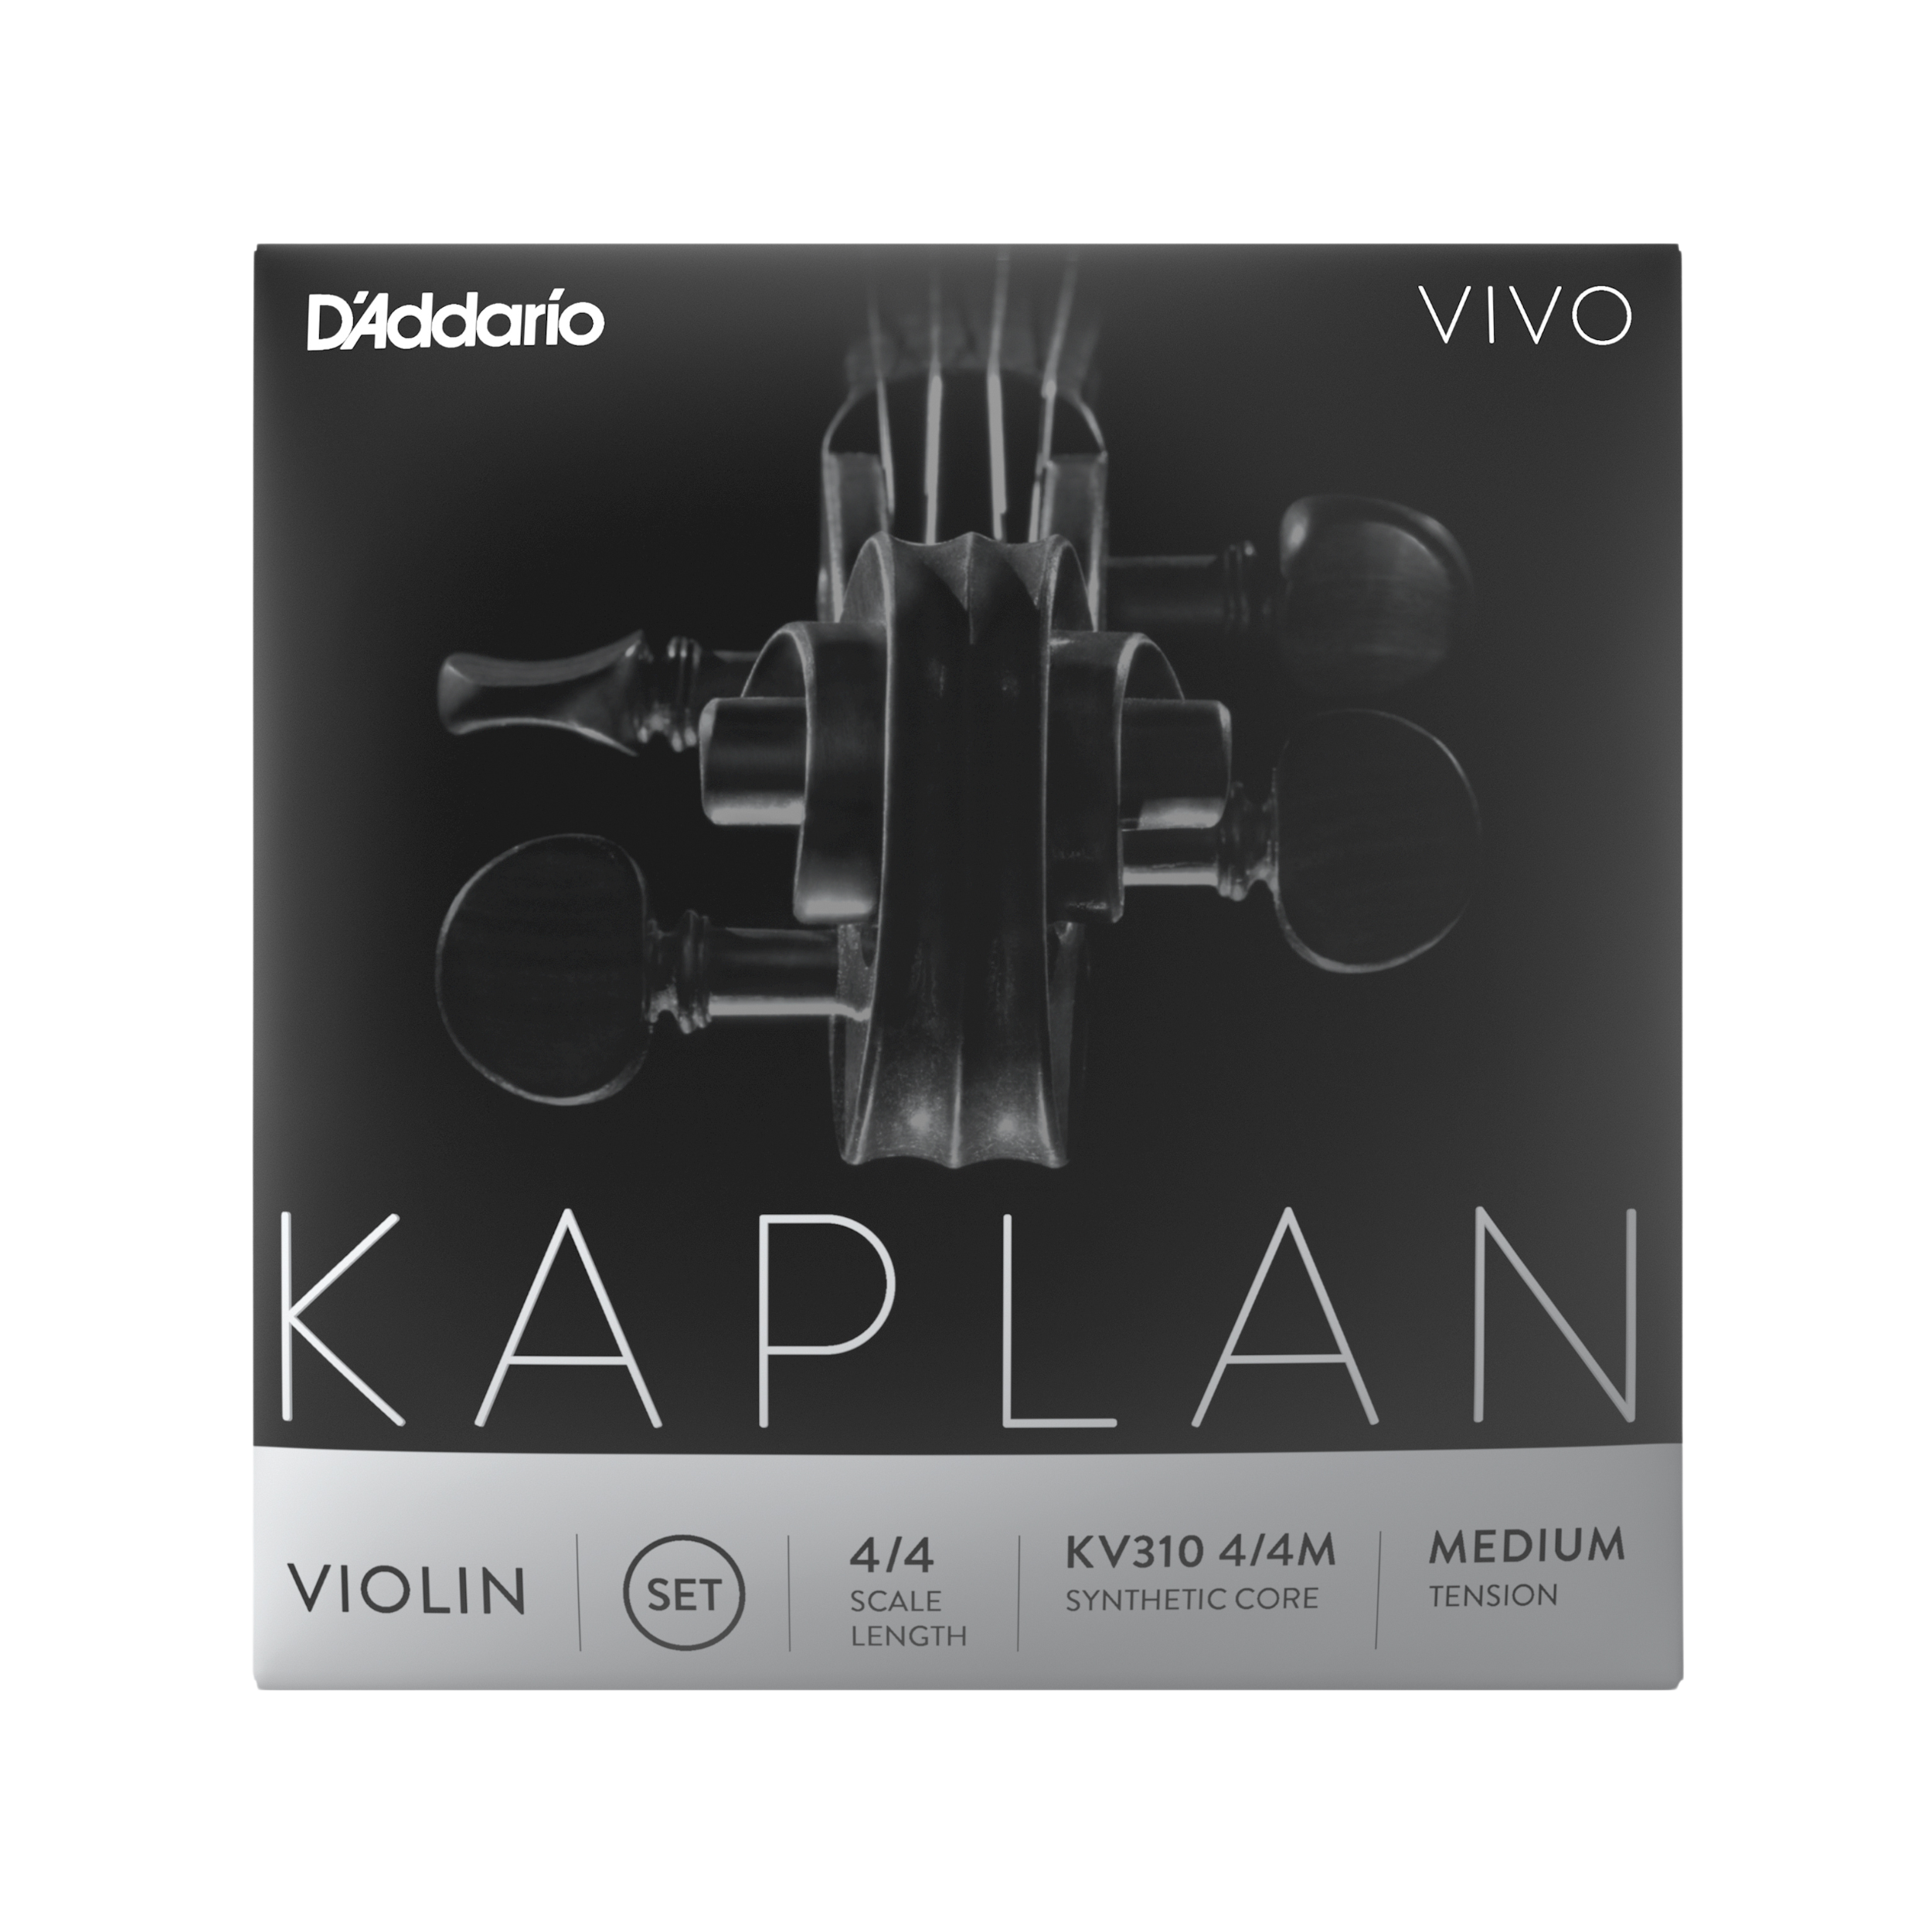 D'Addario Kaplan Vivo Violin Strings